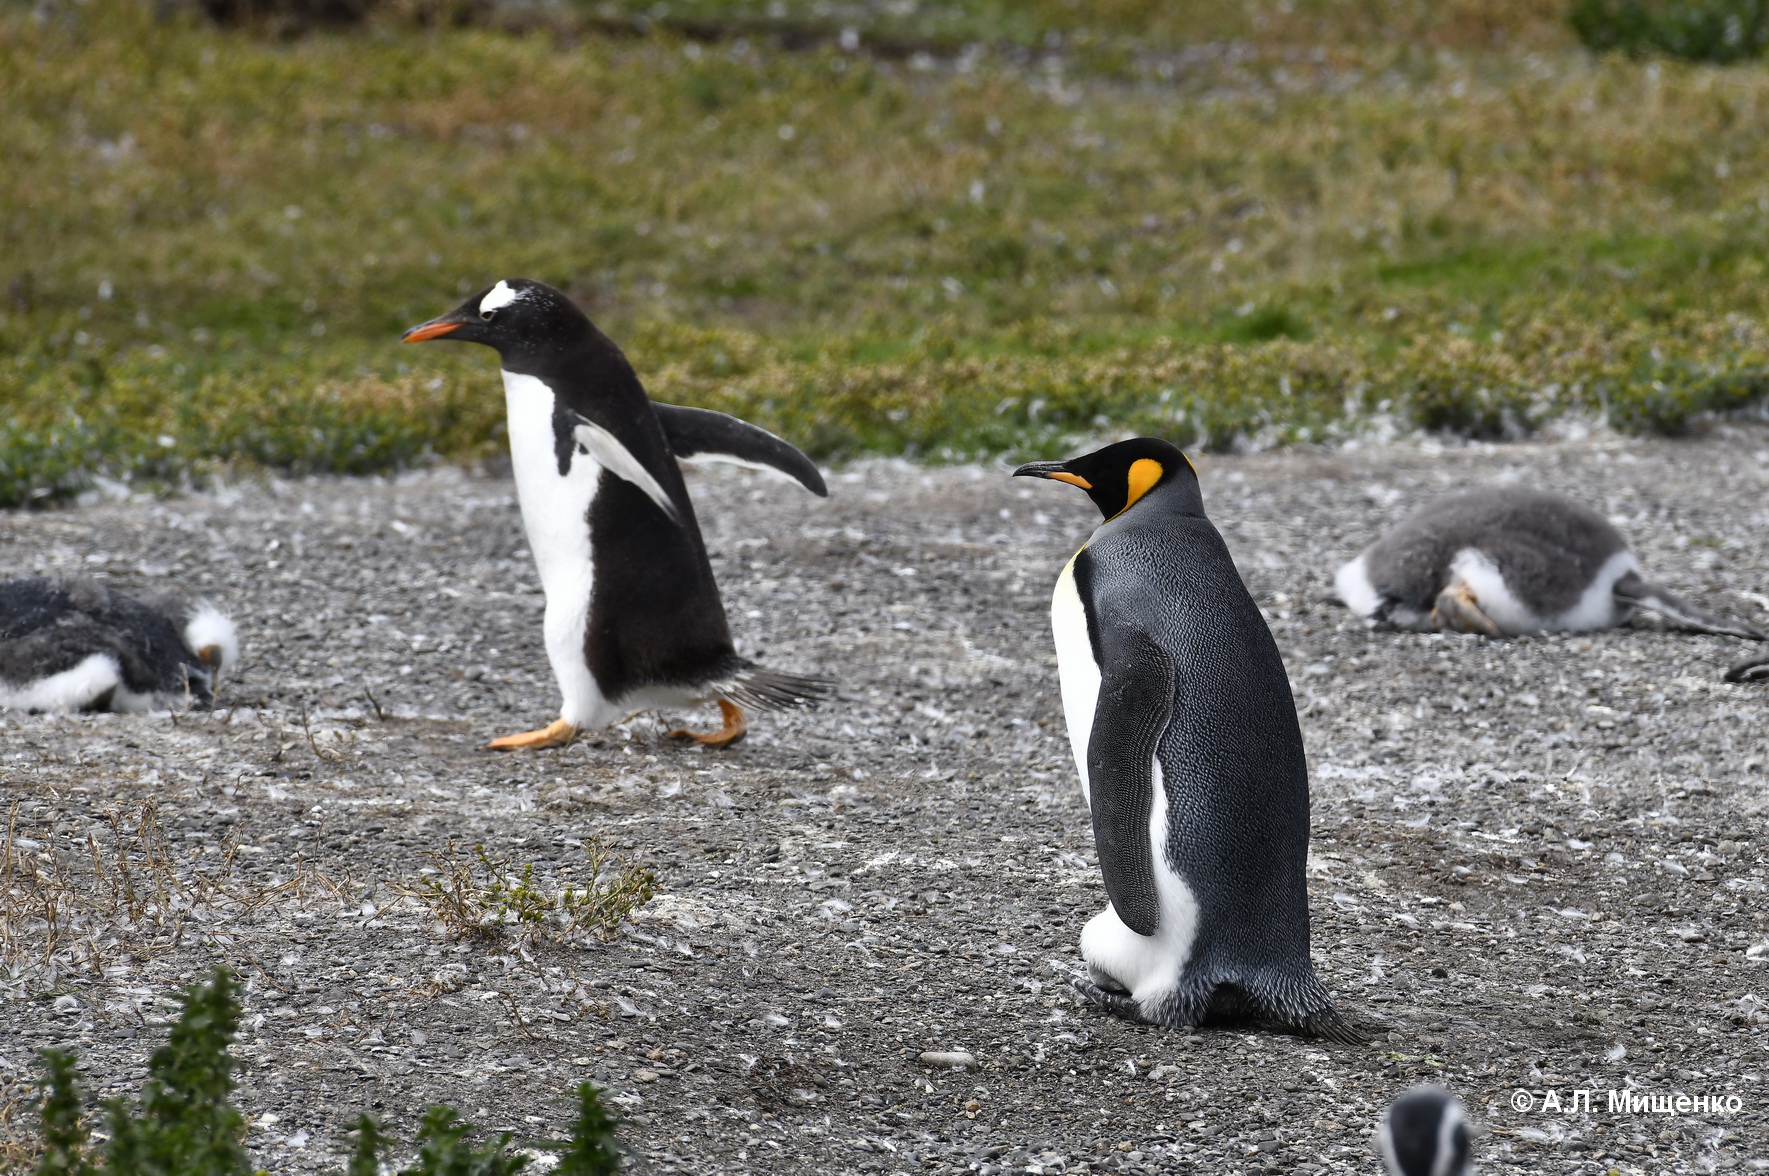 Какой тип развития характерен для субантарктического пингвина